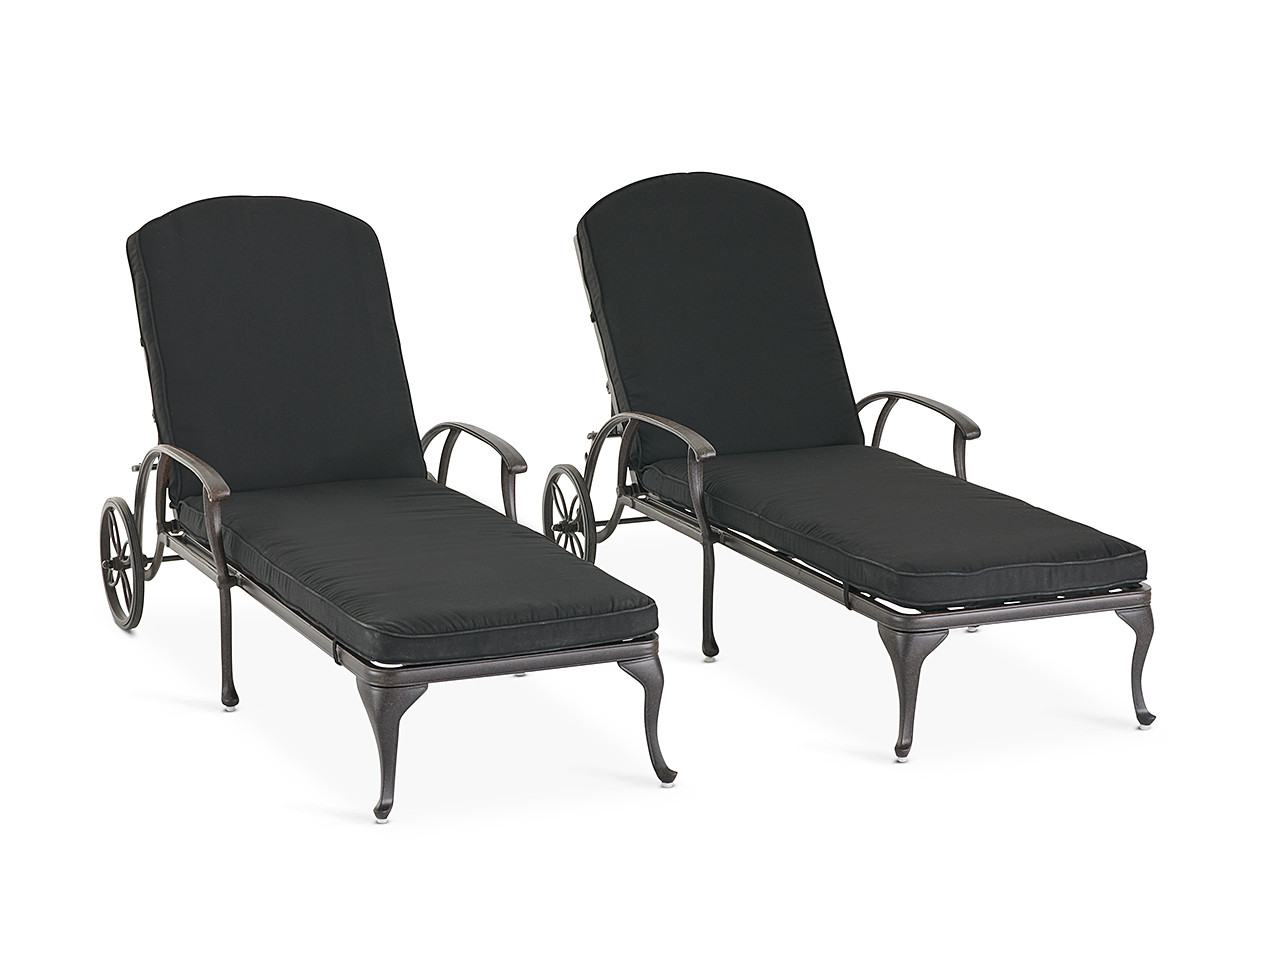 Carlisle Aged Bronze Cast Aluminum and Raven Black Cushion 2 Pc. Chaise Lounge Set